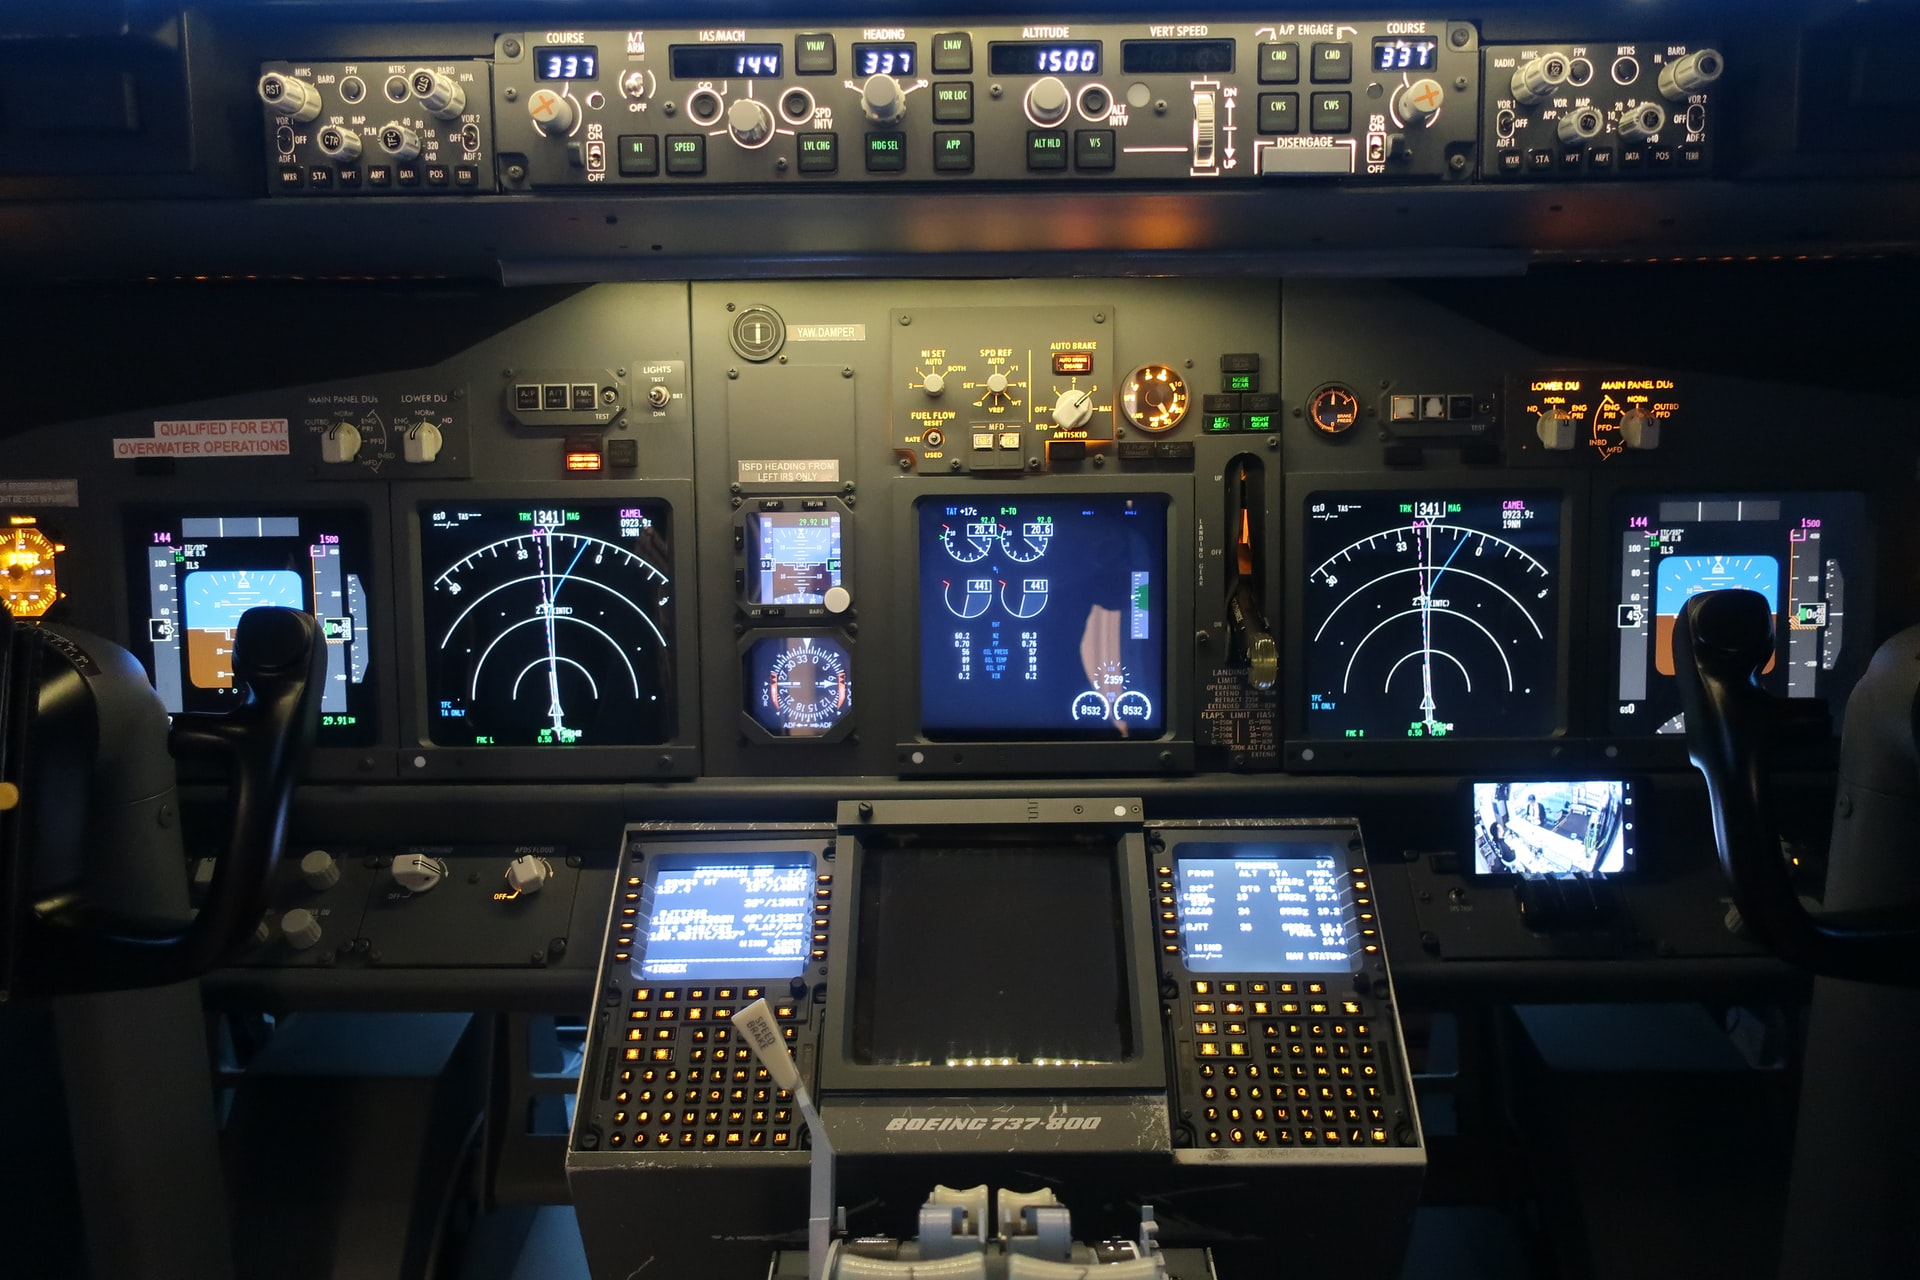 Equipment in an aircraft cockpit.